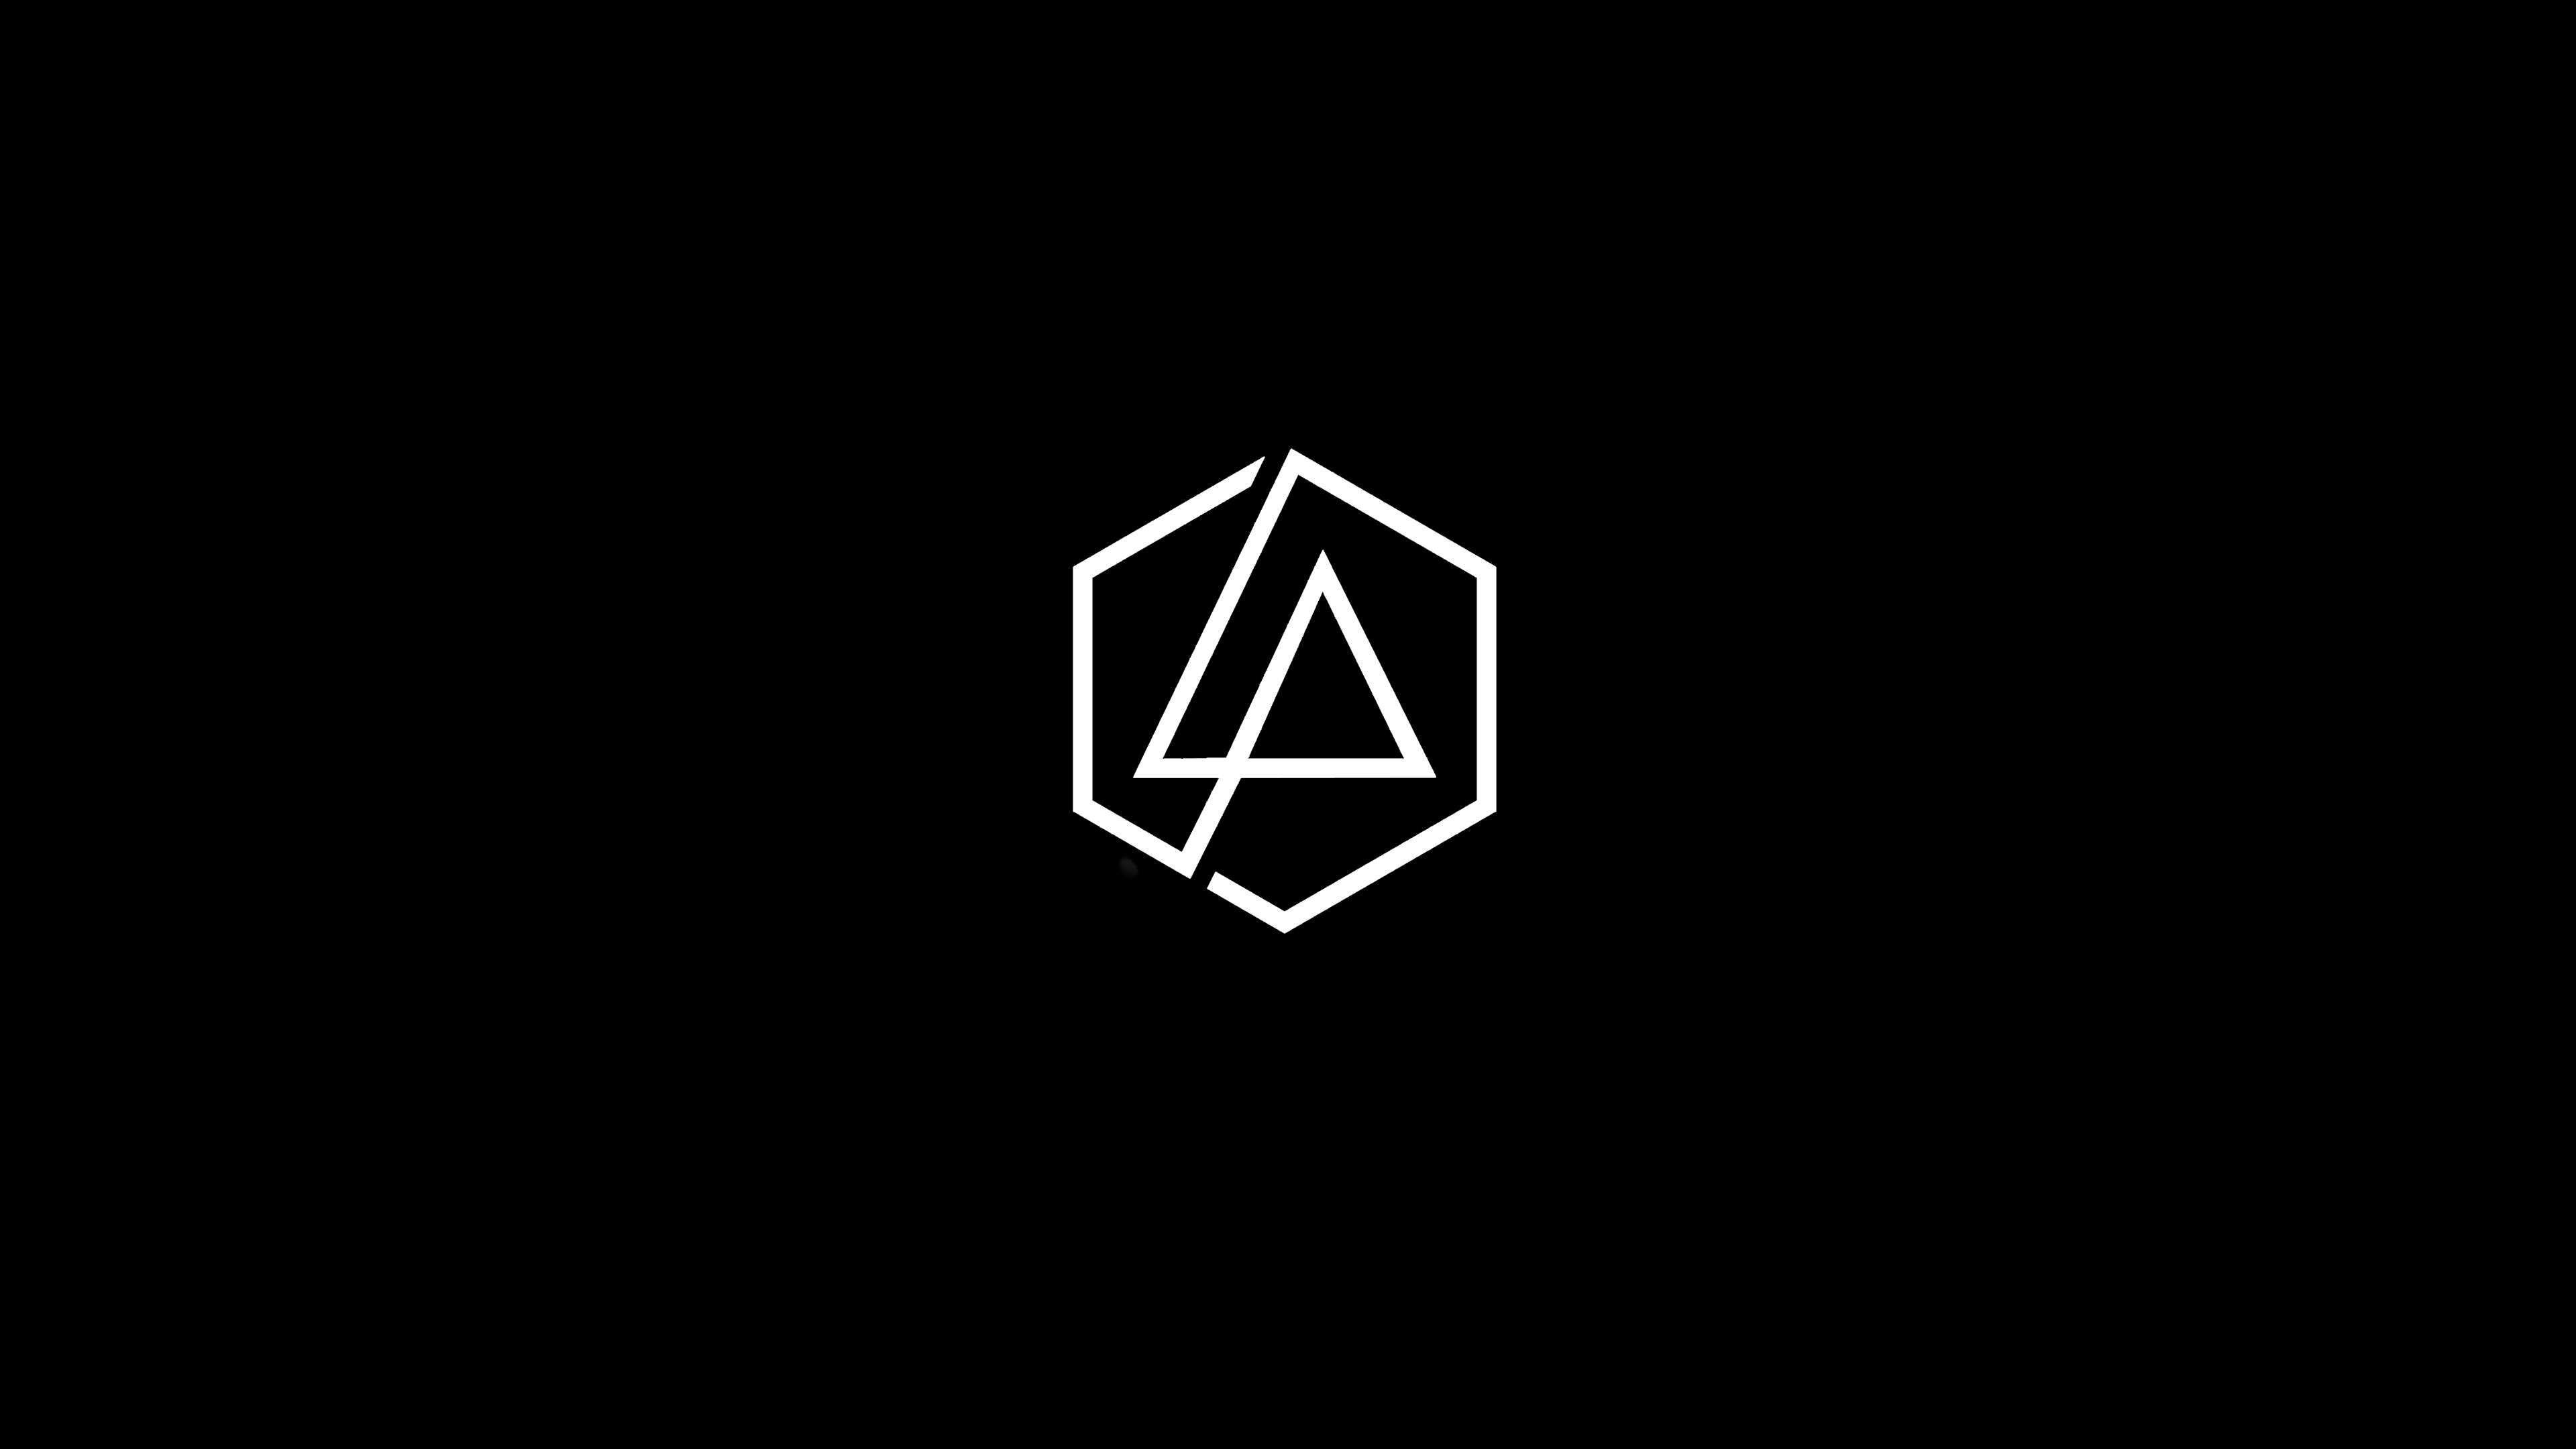 General 3840x2160 minimalism simple background artwork Linkin Park logo black band